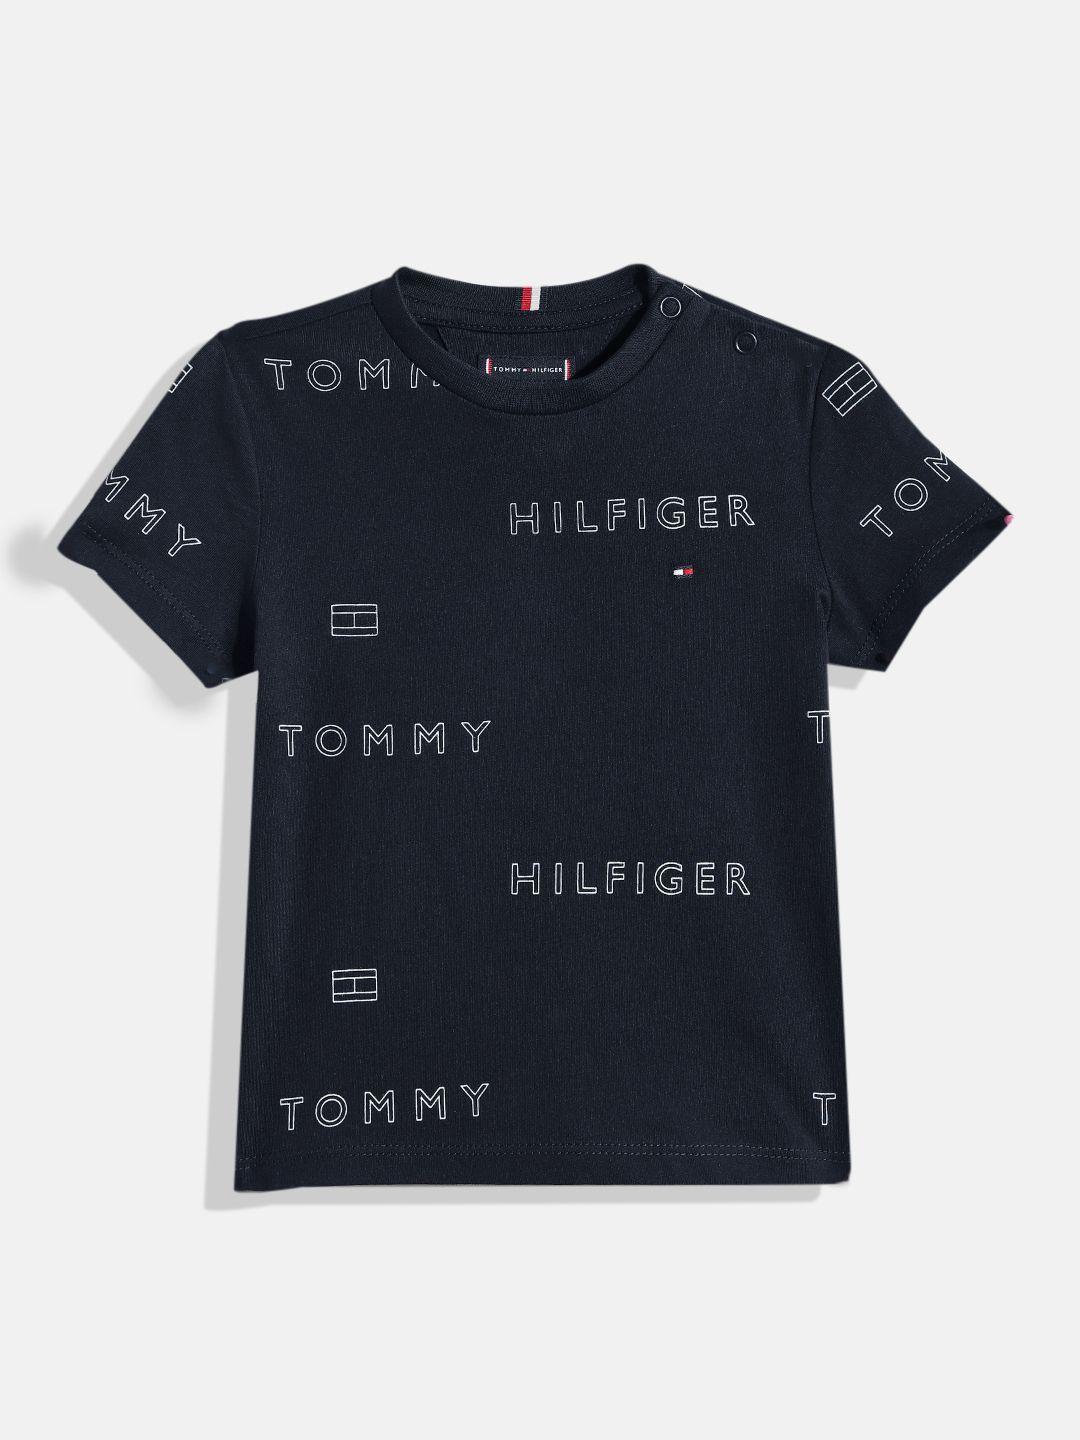 tommy hilfiger boys navy blue brand logo printed pure cotton t-shirt